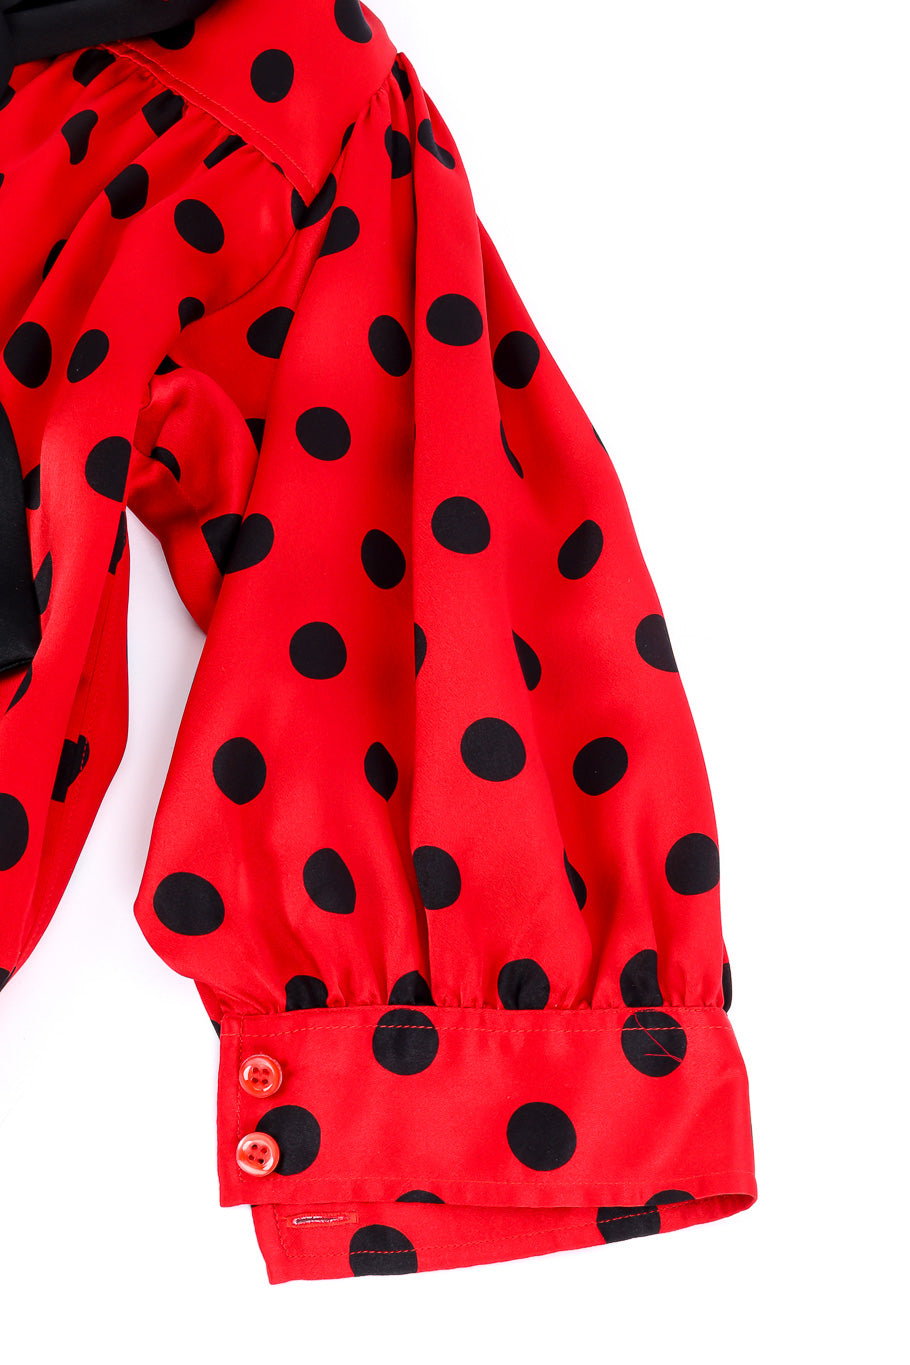 Yves Saint Laurent polka dot silk blouse sleeve detail @recessla